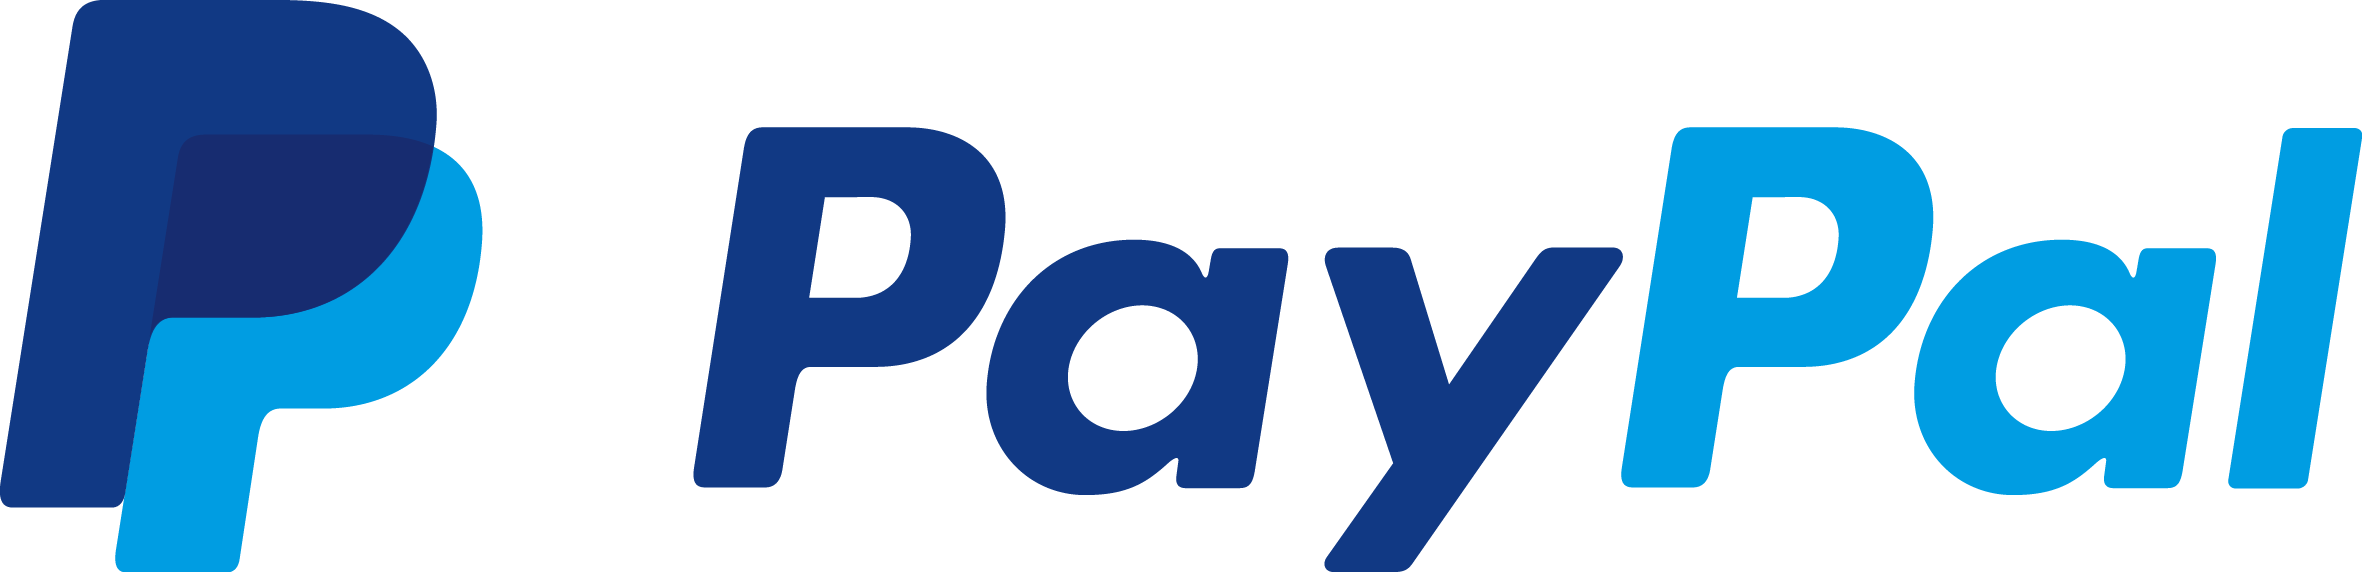 Paypal New Logo, Merchant Accounts, Online Merchant - Paypal Logo Png (2362x572)